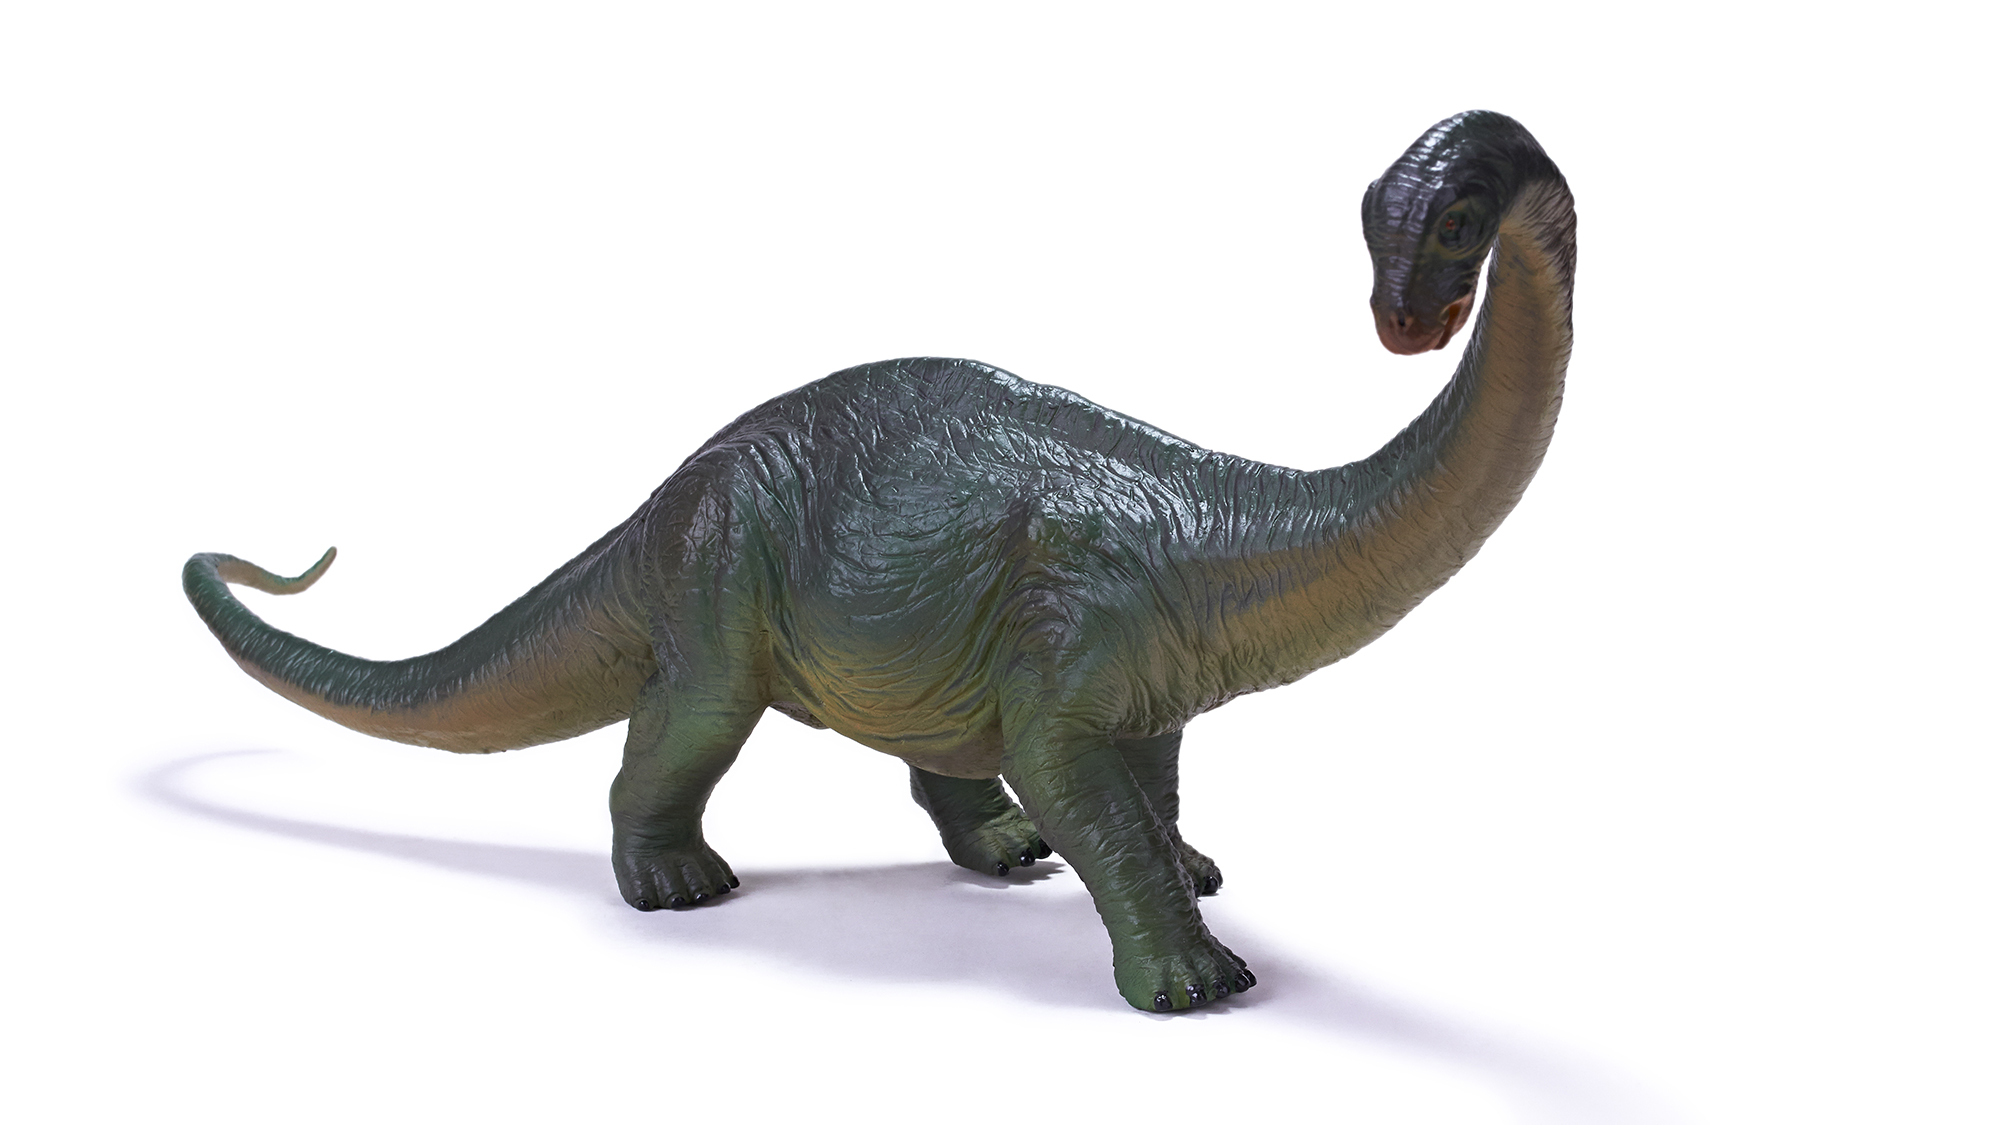 Dinosaur toy-Brontosaurus toy model for gift